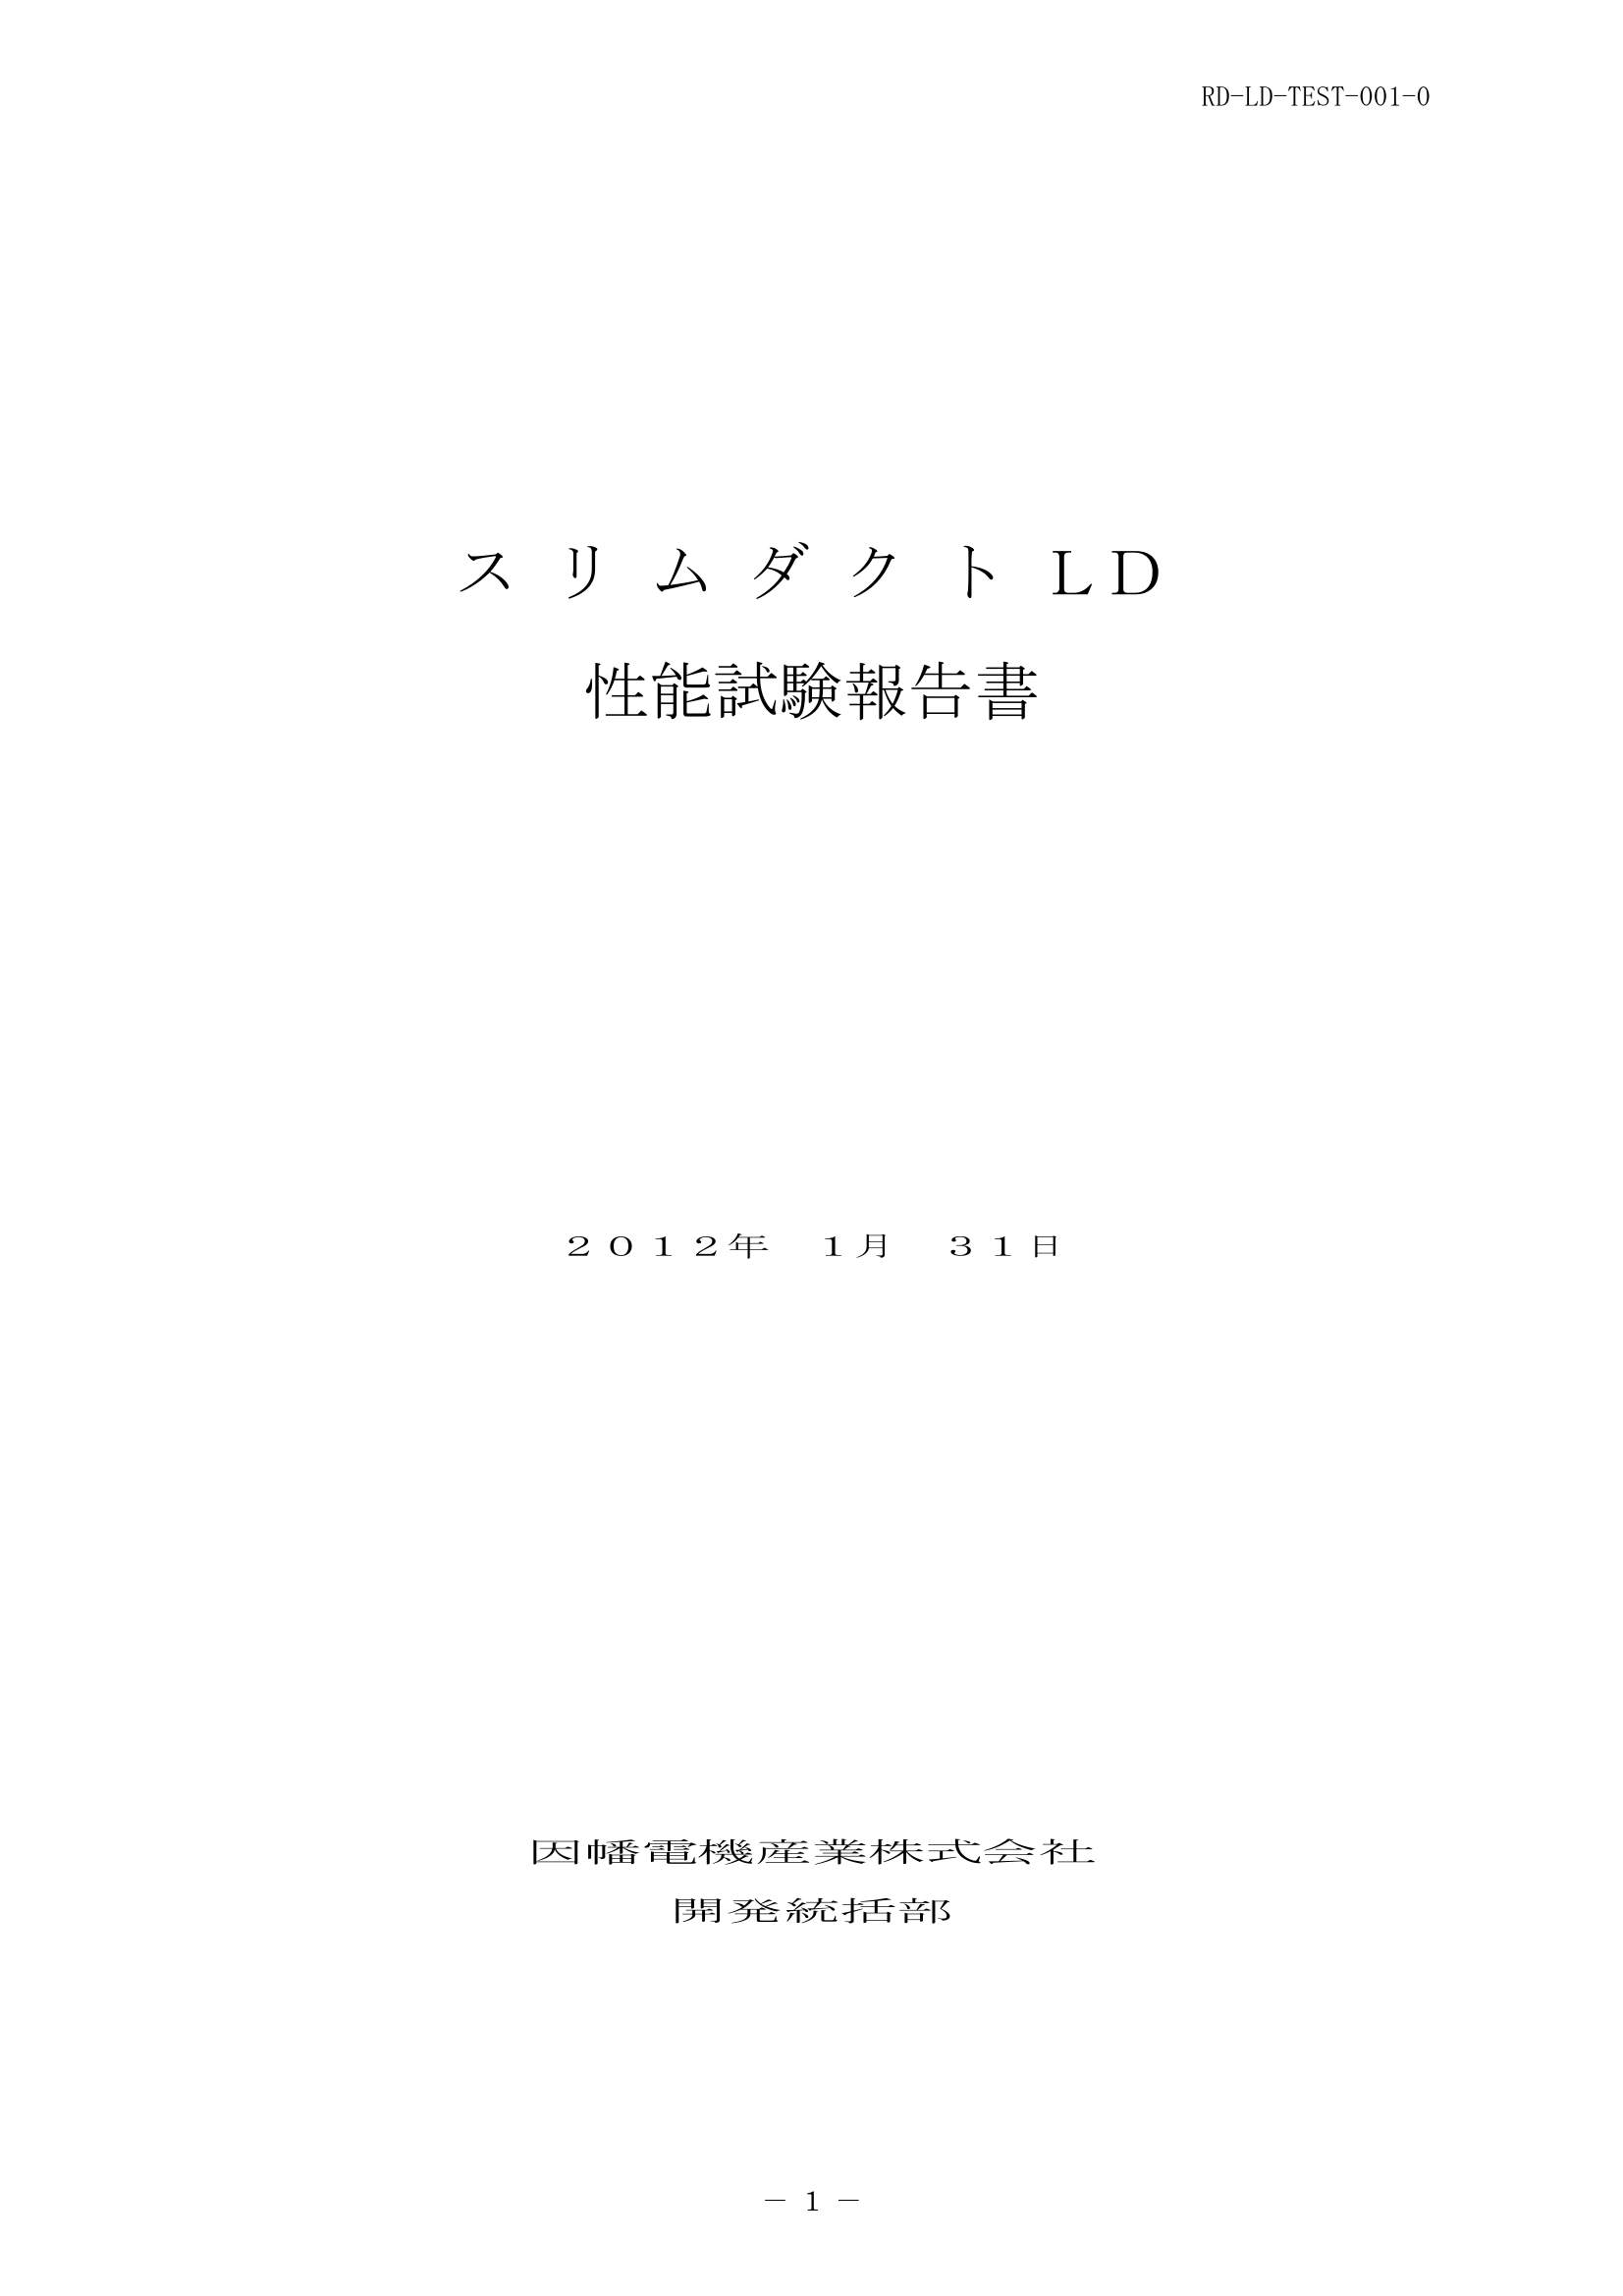 LD_性能試験報告書_20200131.pdf